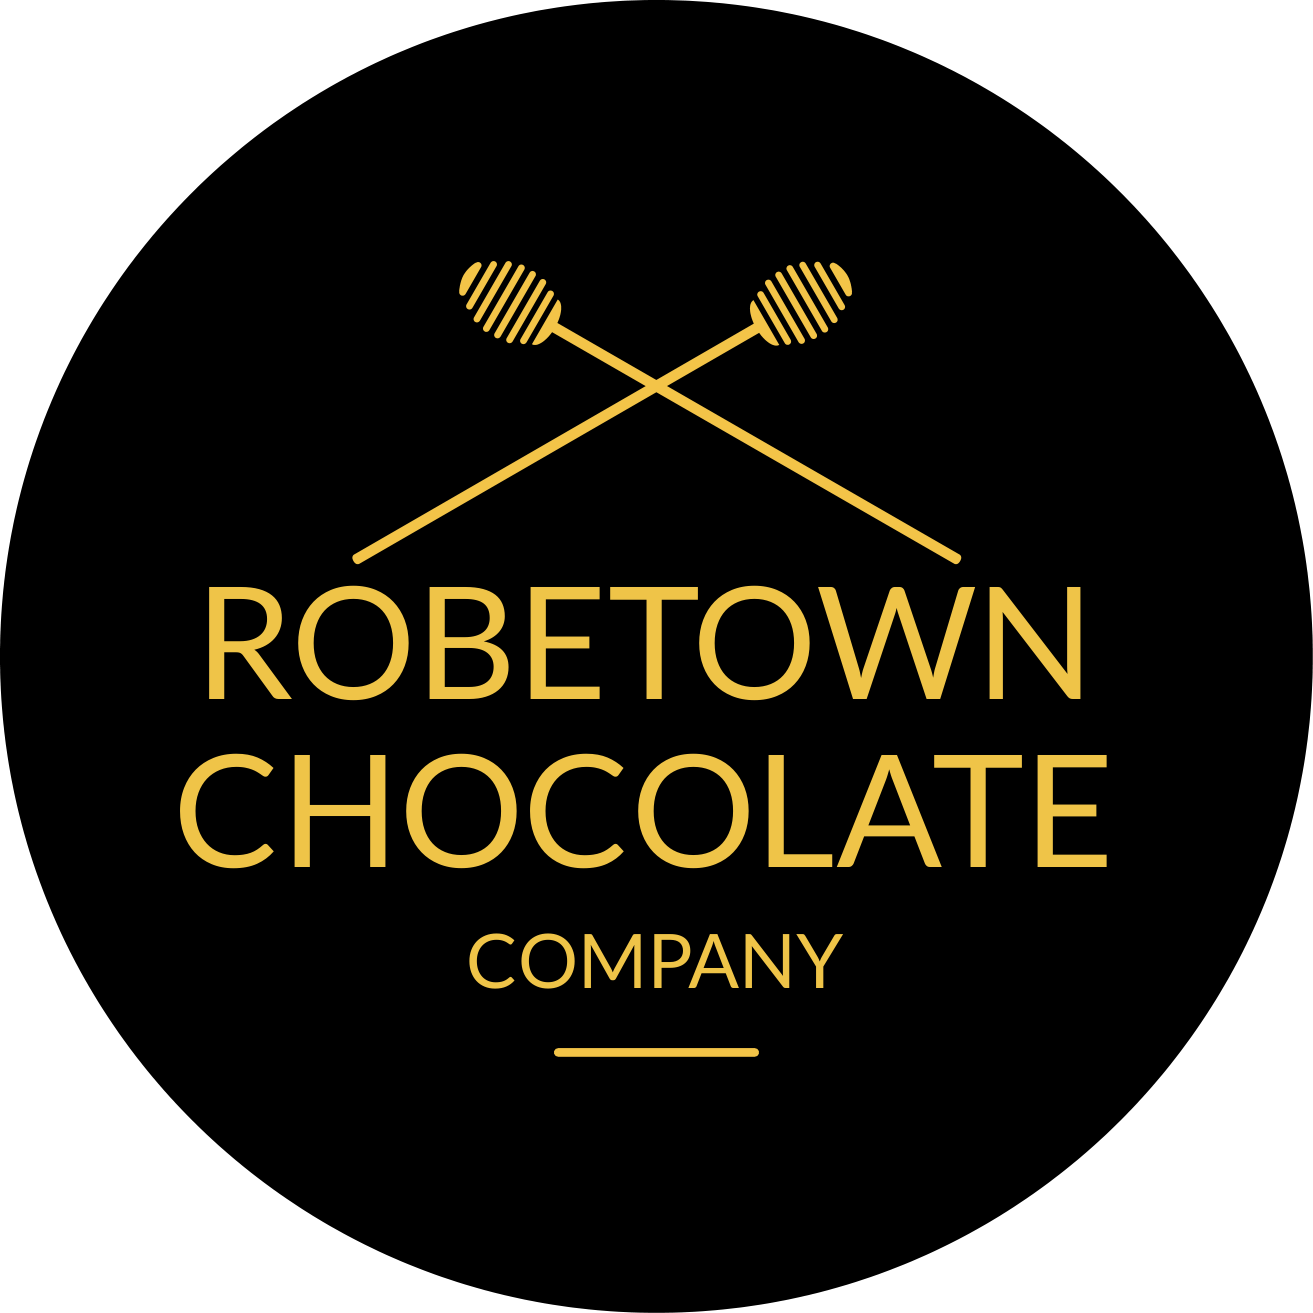 Robetown Chocolate Company